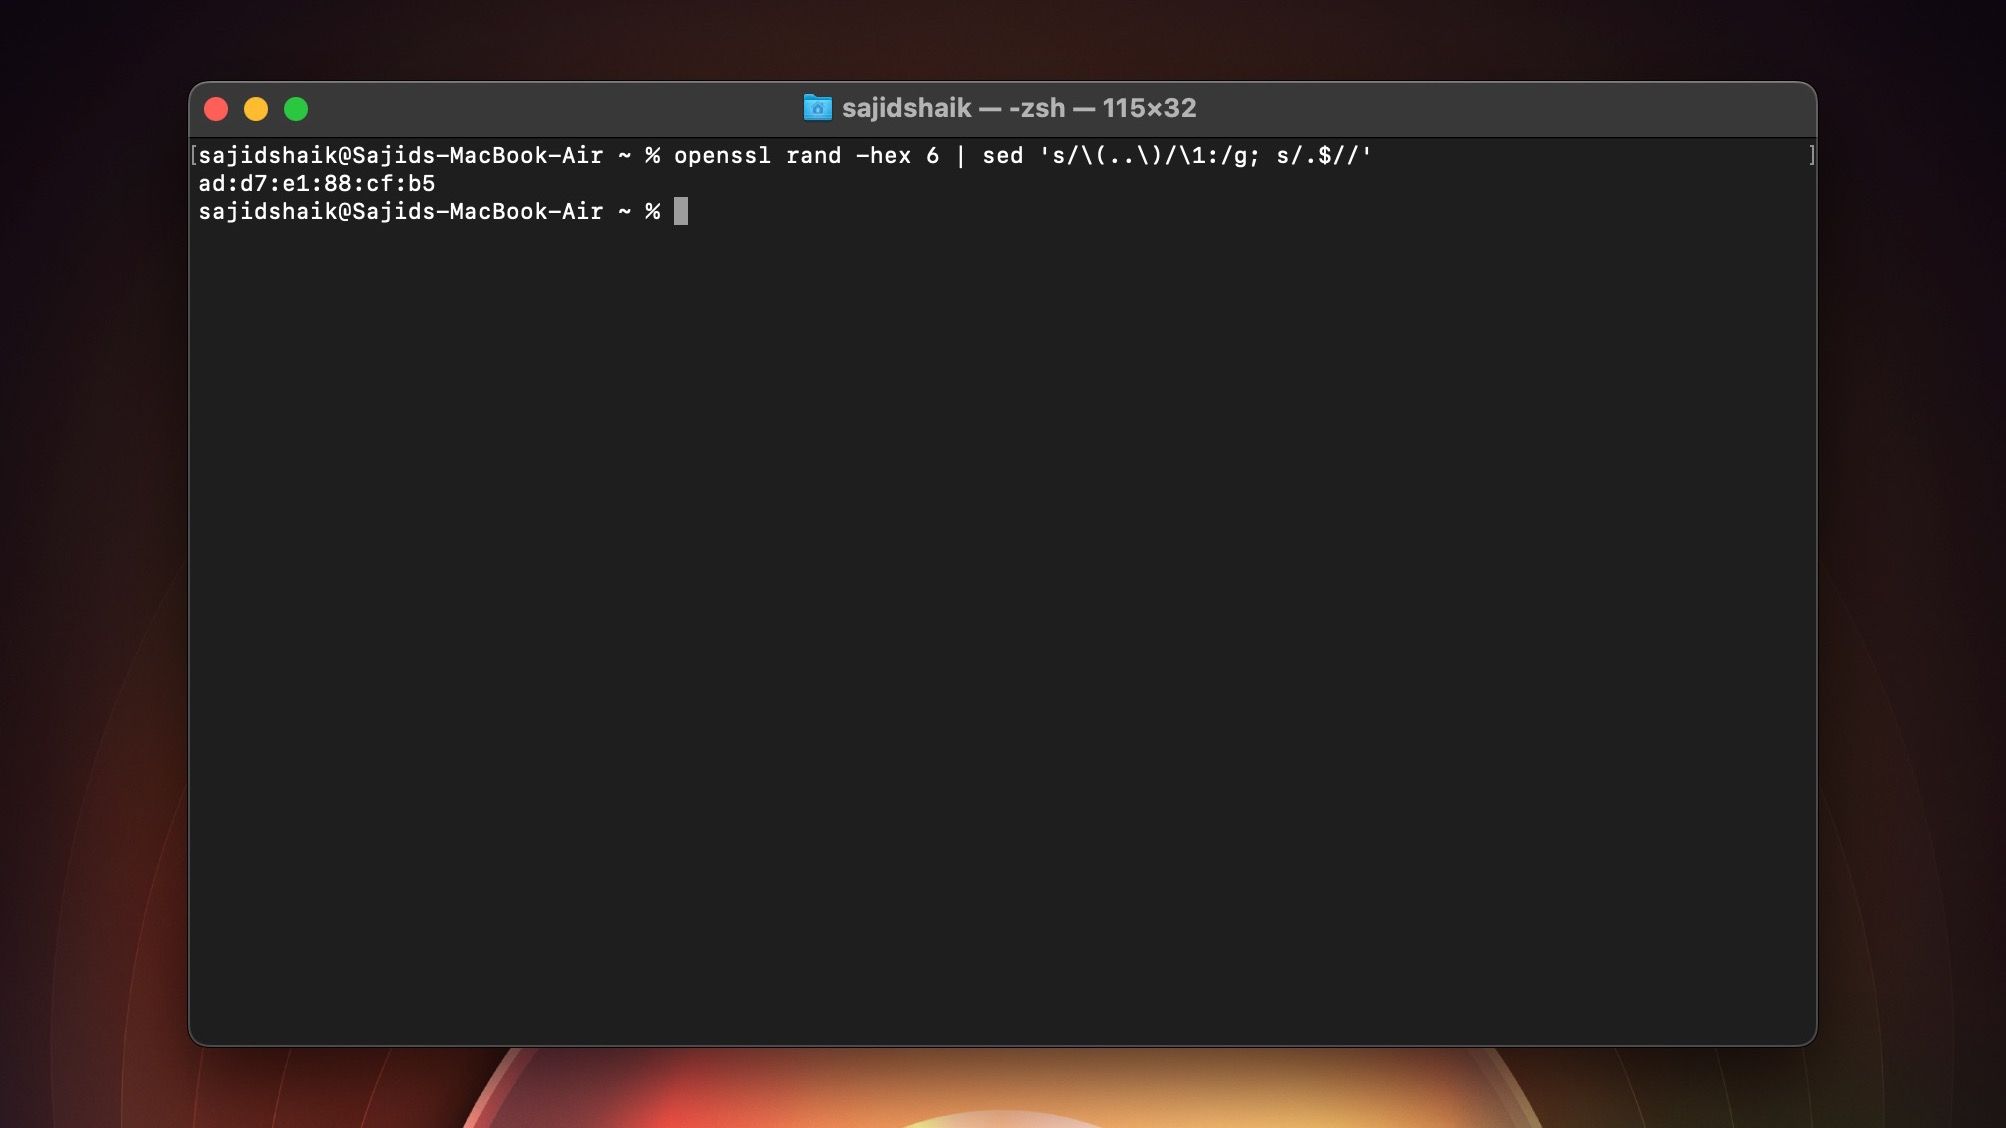 Command to generate random MAC address in Terminal